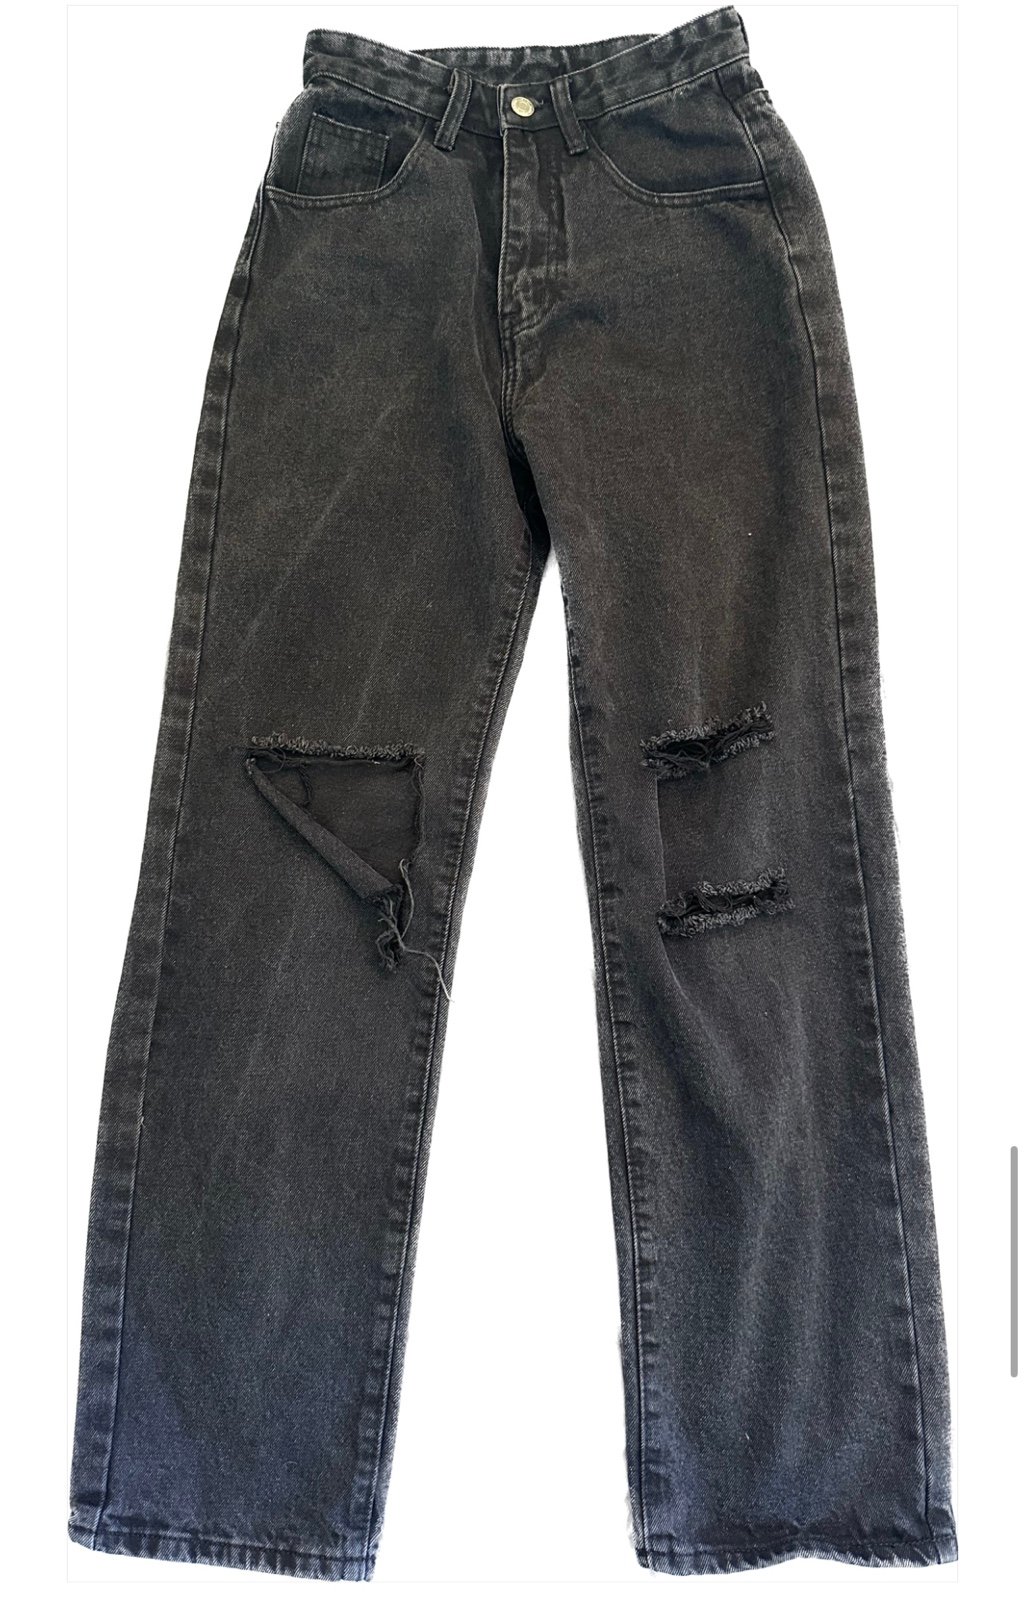 Buy SHEIN black ripped baggy jeans Oxt9jJUfm Store Online